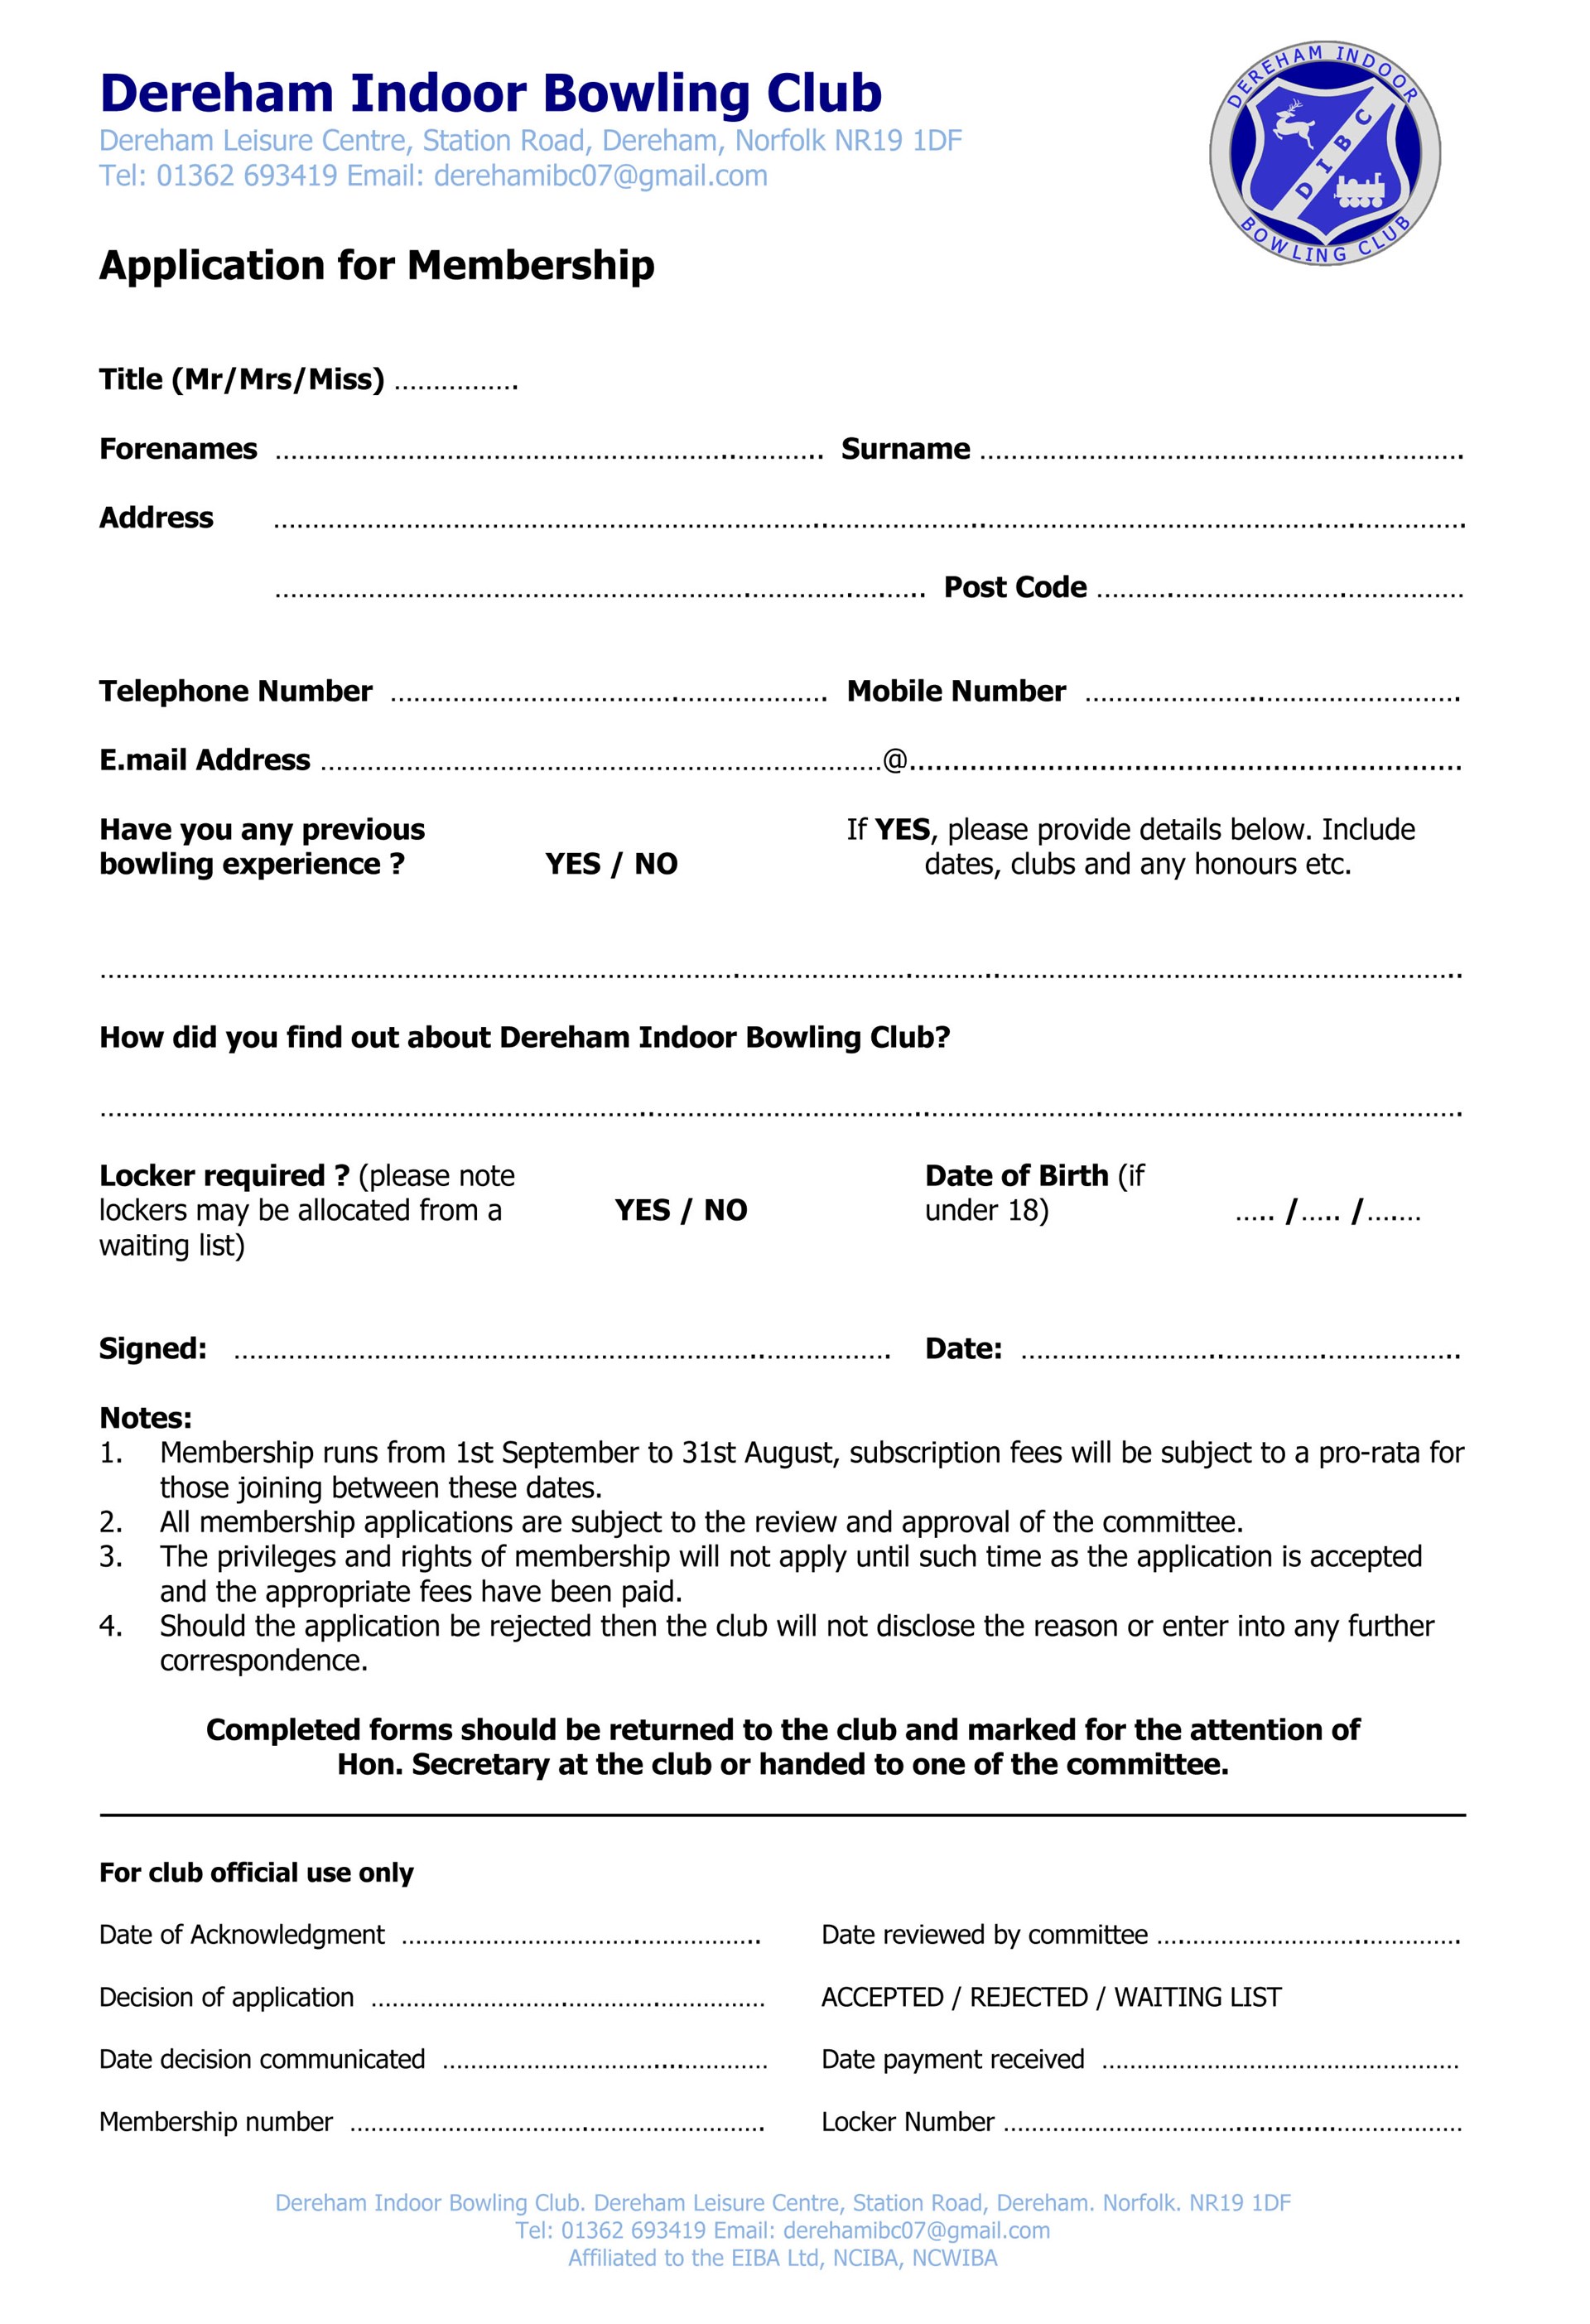 Dereham Indoor Bowling Club New Member Application Form